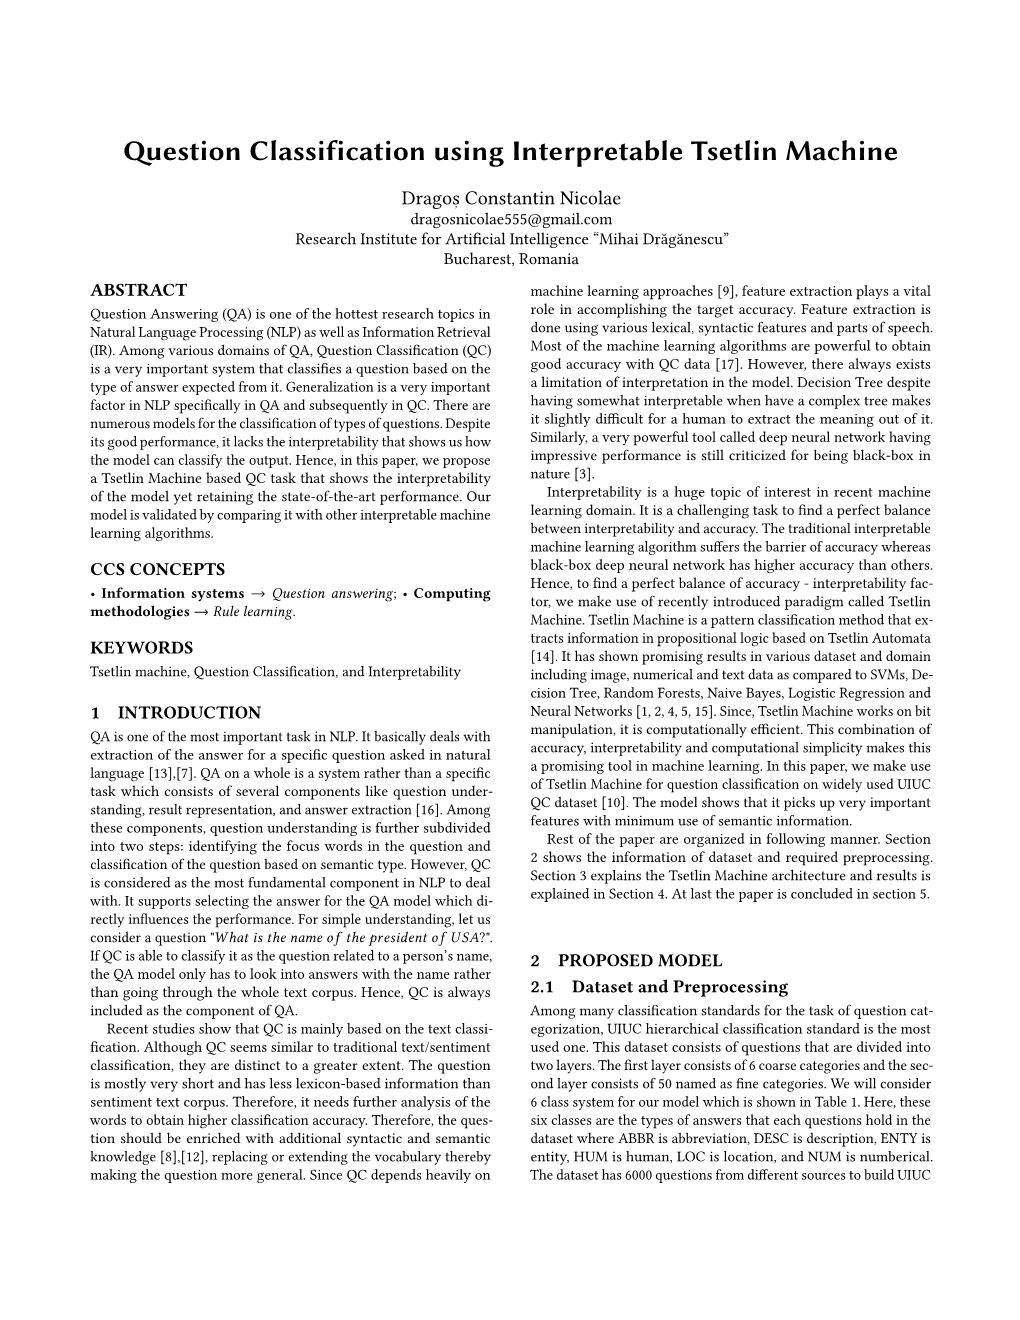 Question Classification Using Interpretable Tsetlin Machine